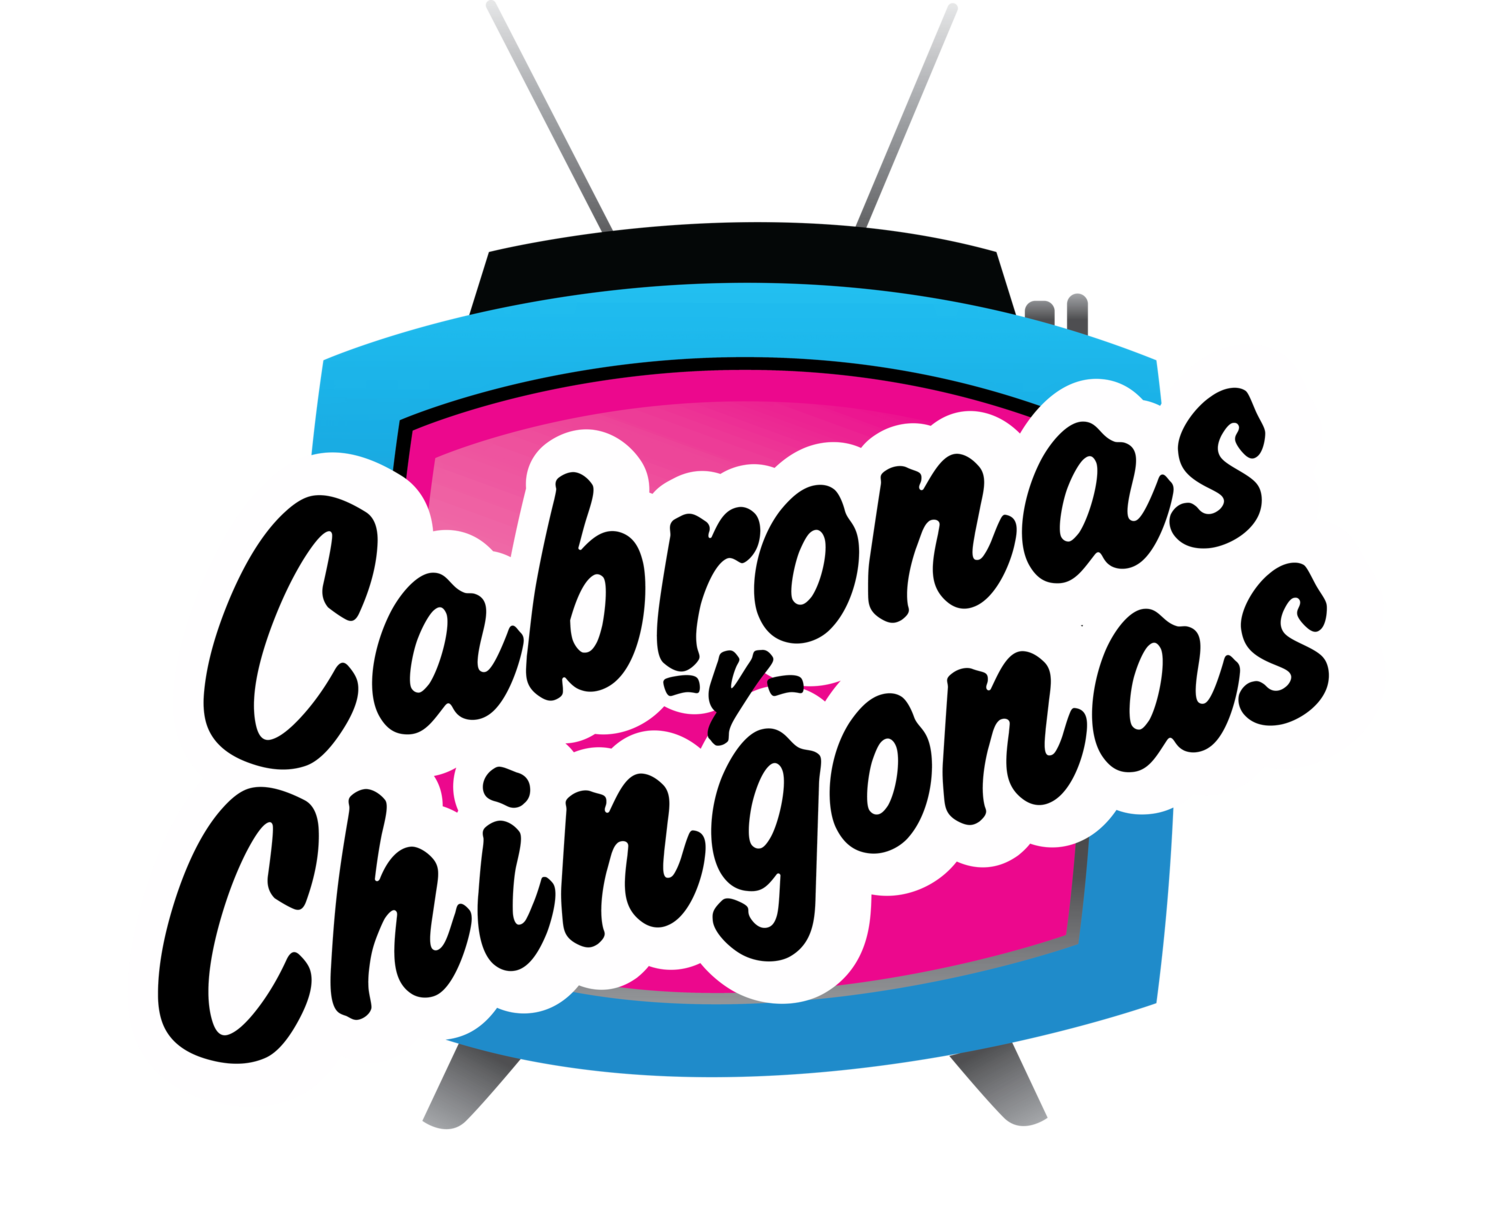 Cabronas y Chingonas Podcast